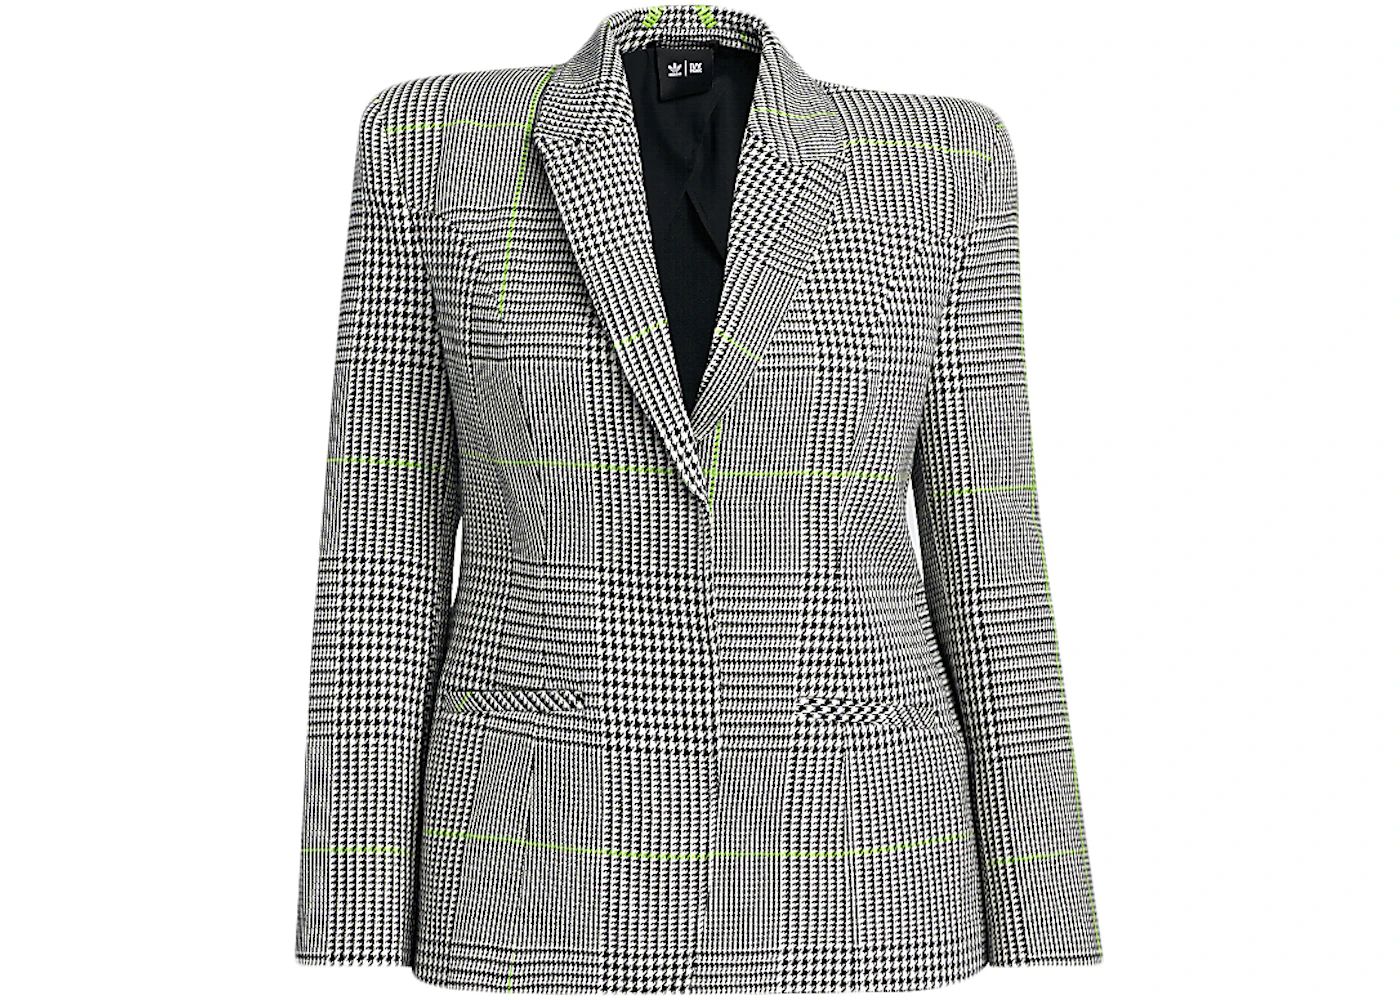 adidas Ivy Park Halls of Ivy Suit Jacket (Plus Size)Clear Grey/Black | StockX